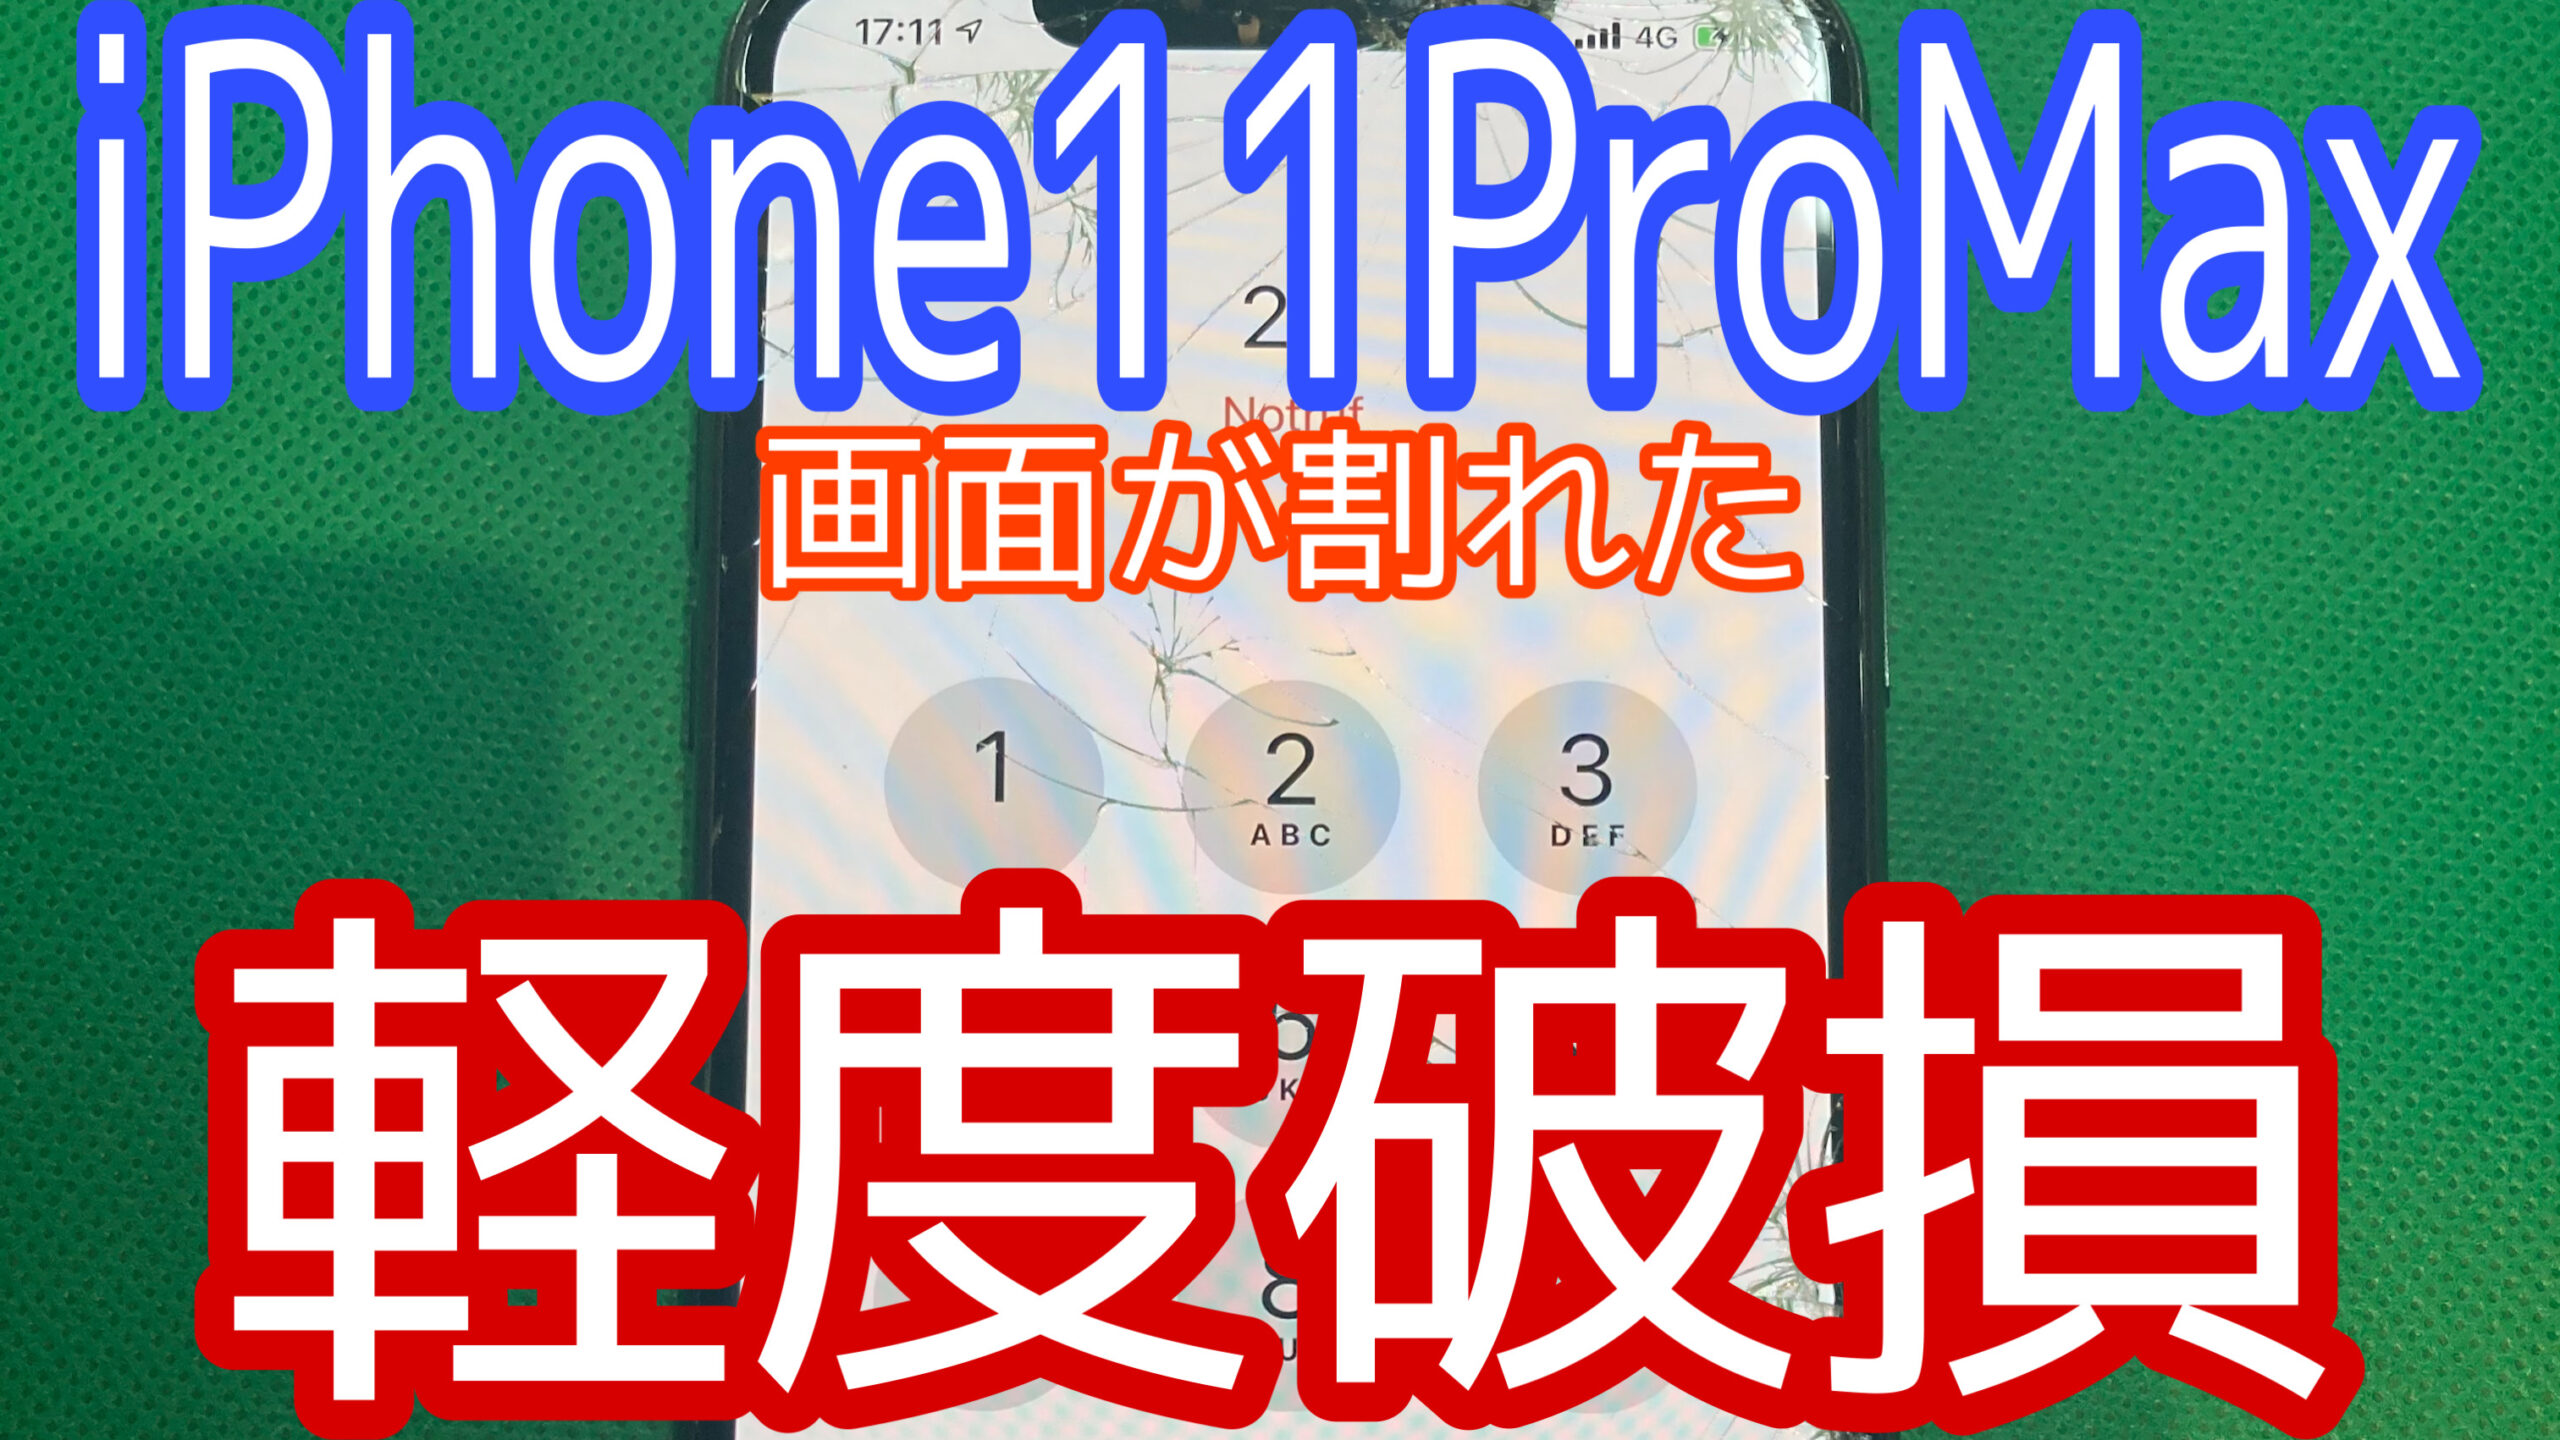 iPhone11ProMaxアイキャッチ画像